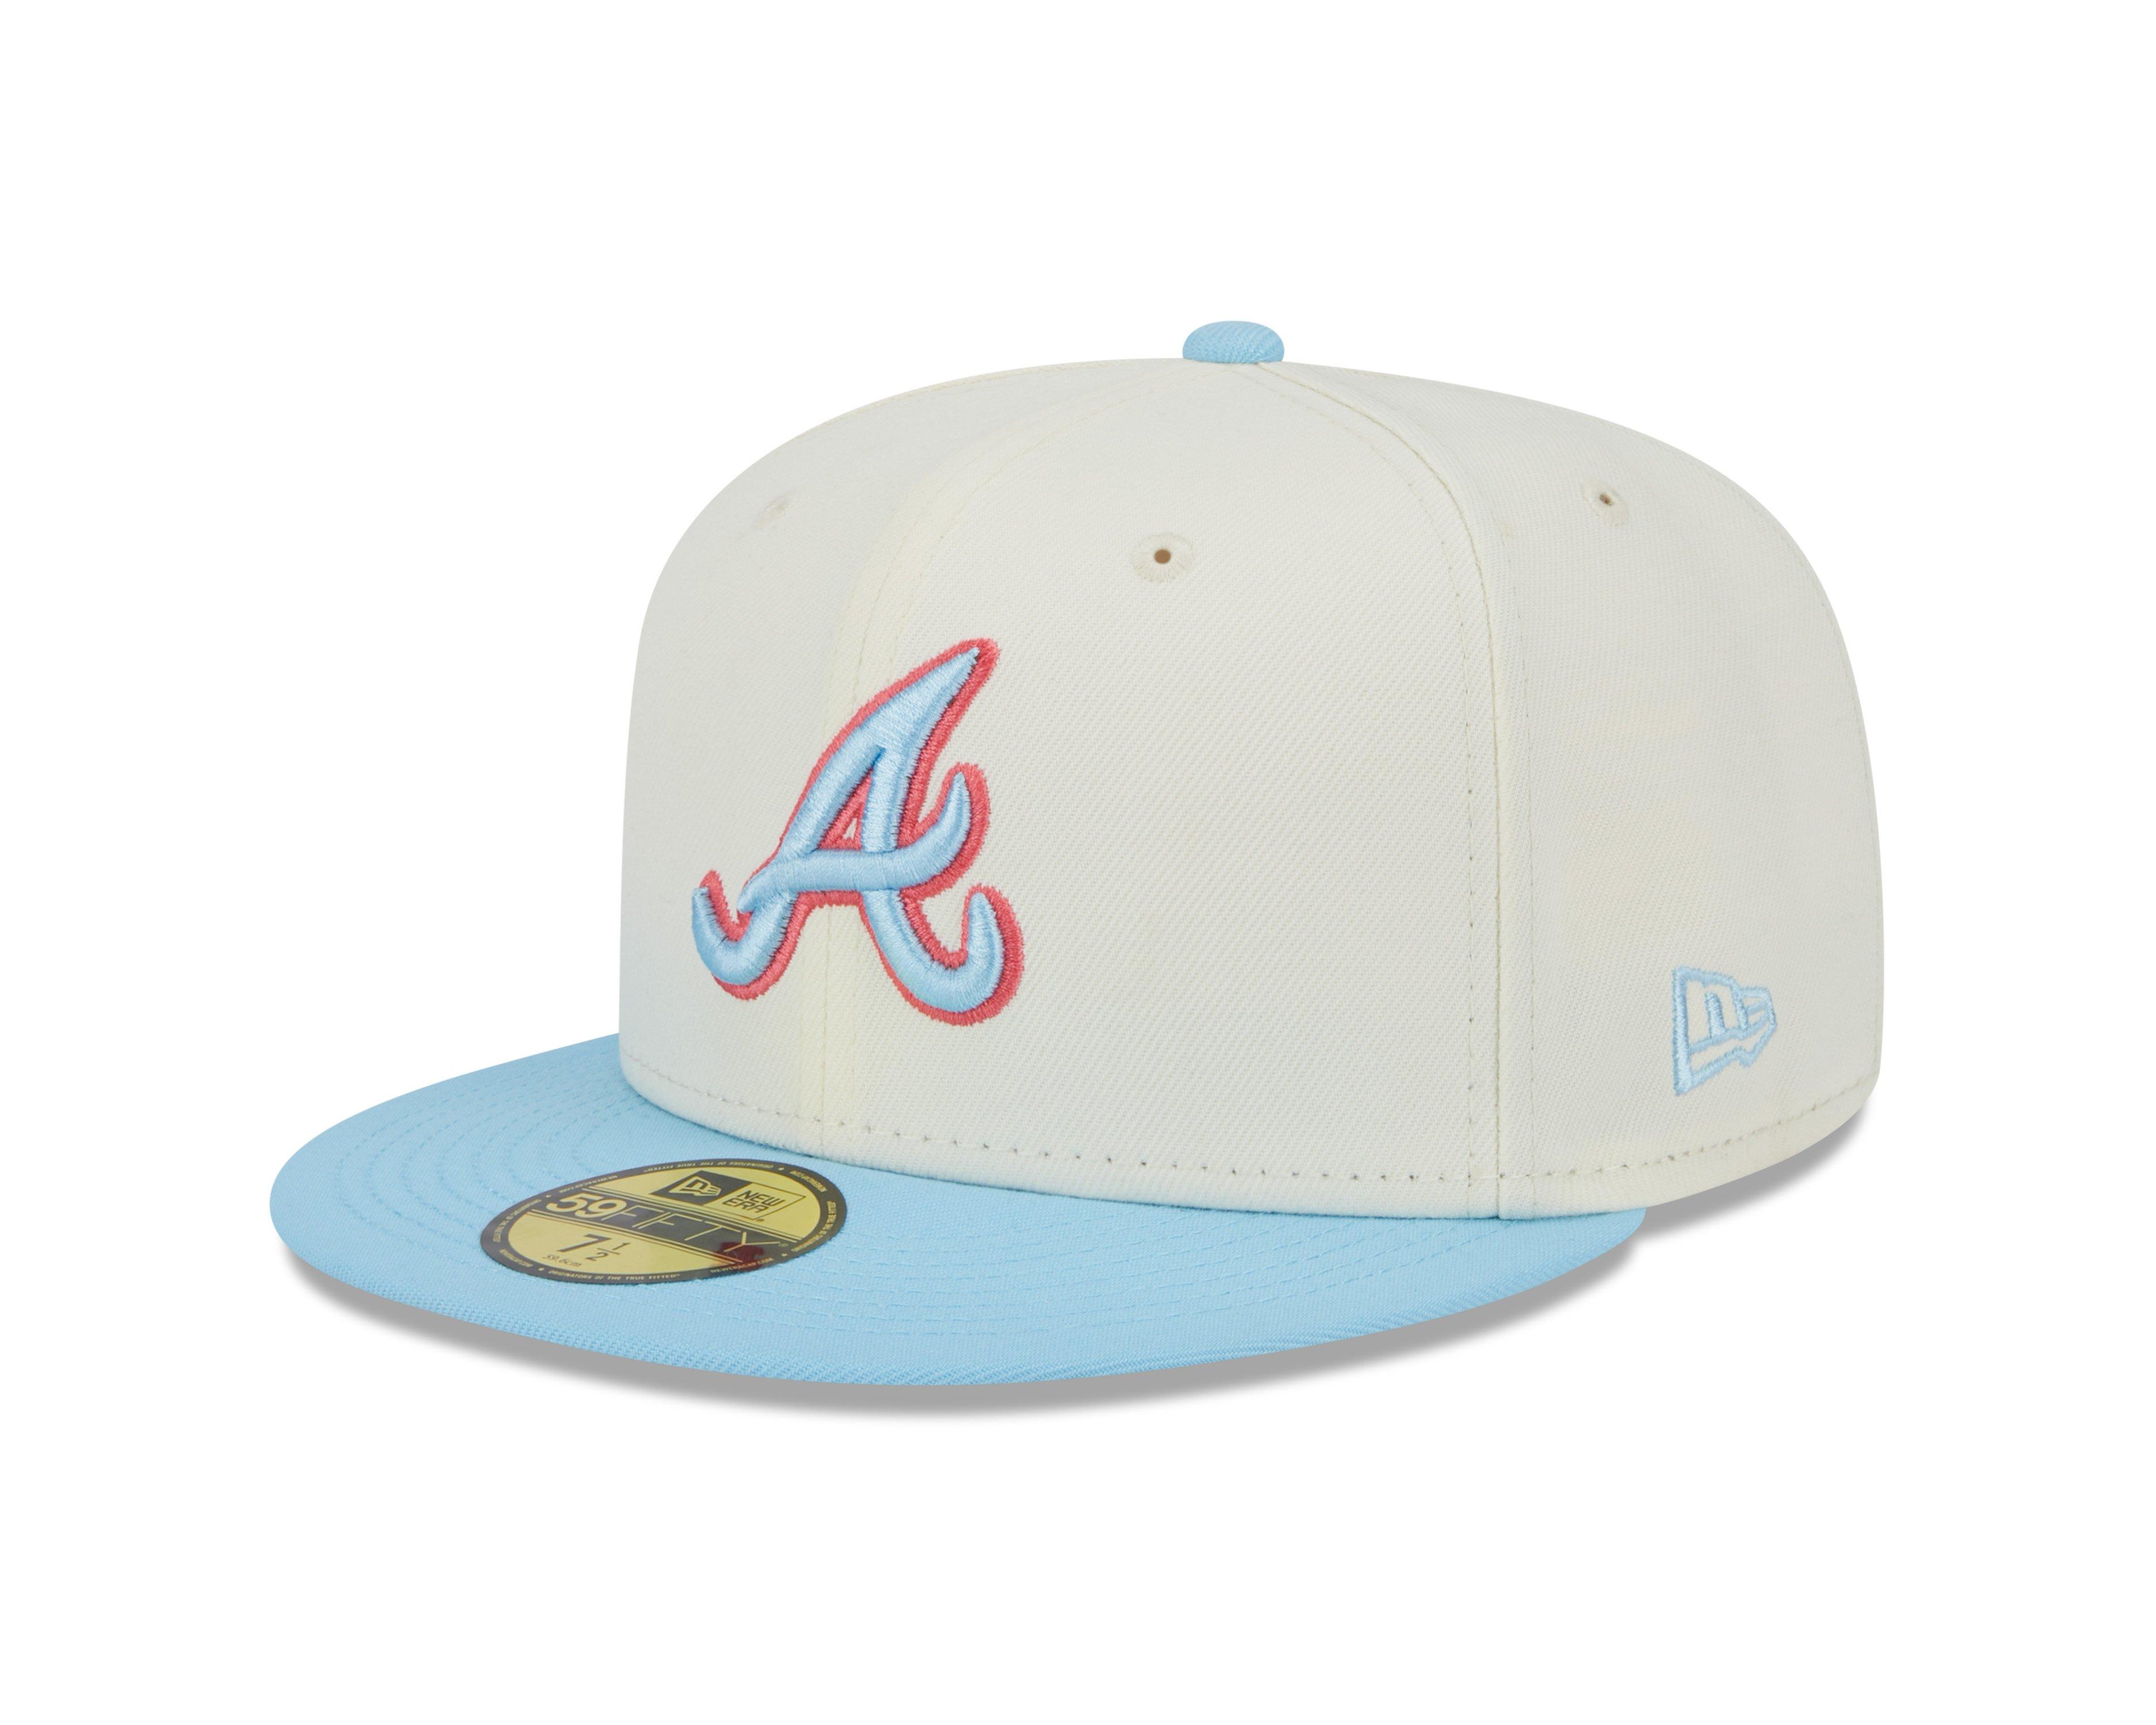 Atlanta Braves TEAM-BASIC Black-White Fitted Hat by New Era